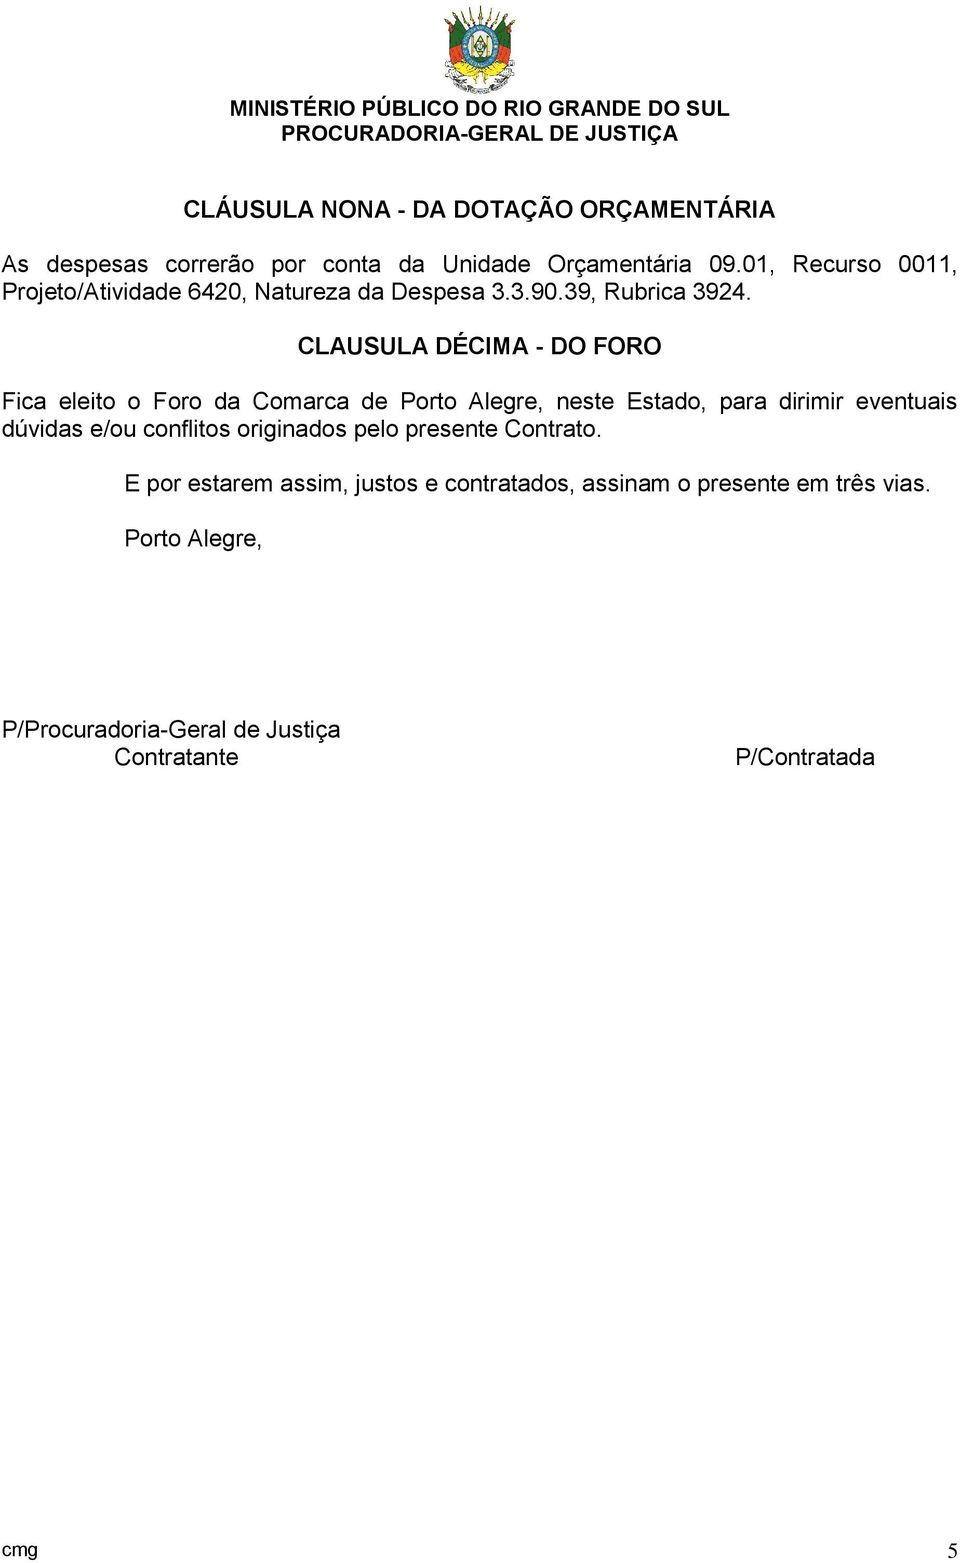 CLAUSULA DÉCIMA - DO FORO Fica eleito o Foro da Comarca de Porto Alegre, neste Estado, para dirimir eventuais dúvidas e/ou